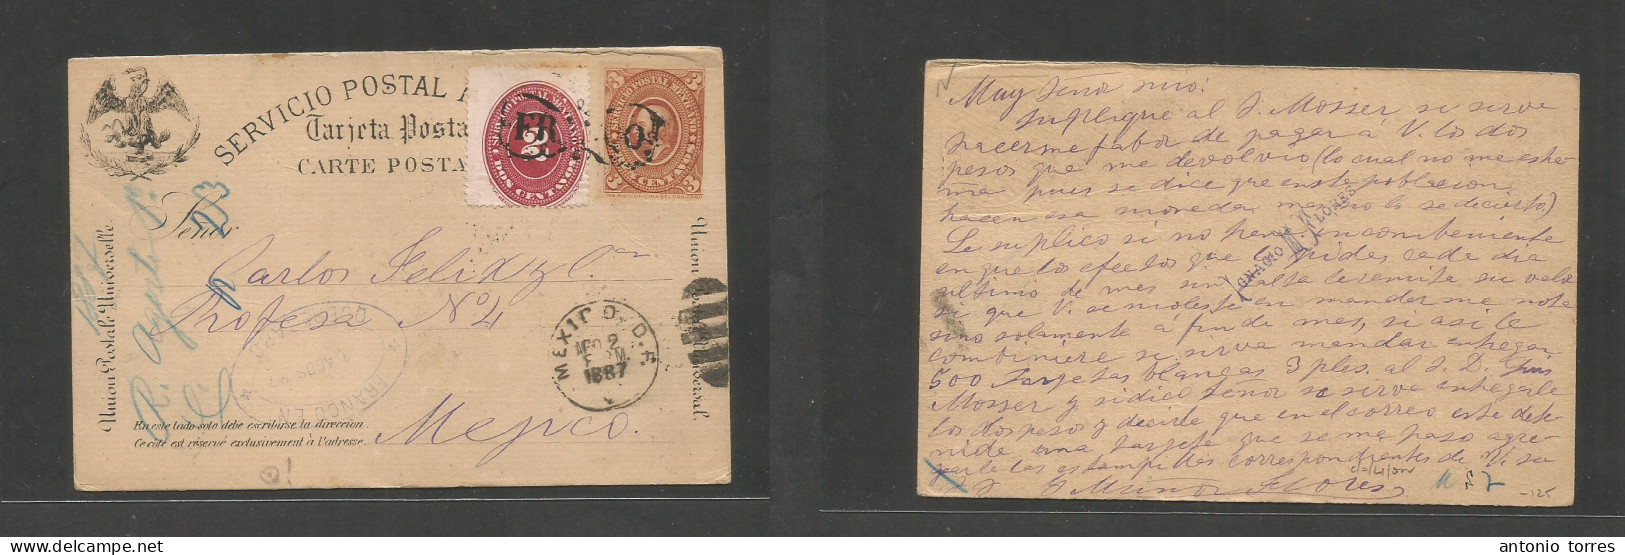 Mexico - Stationery. 1887 (1 Aug) Queretaro - DF (2 Aug) 3c Brown Medalion Stat Card + 2c Red Numeral Adtl, Tied Smashin - Mexiko